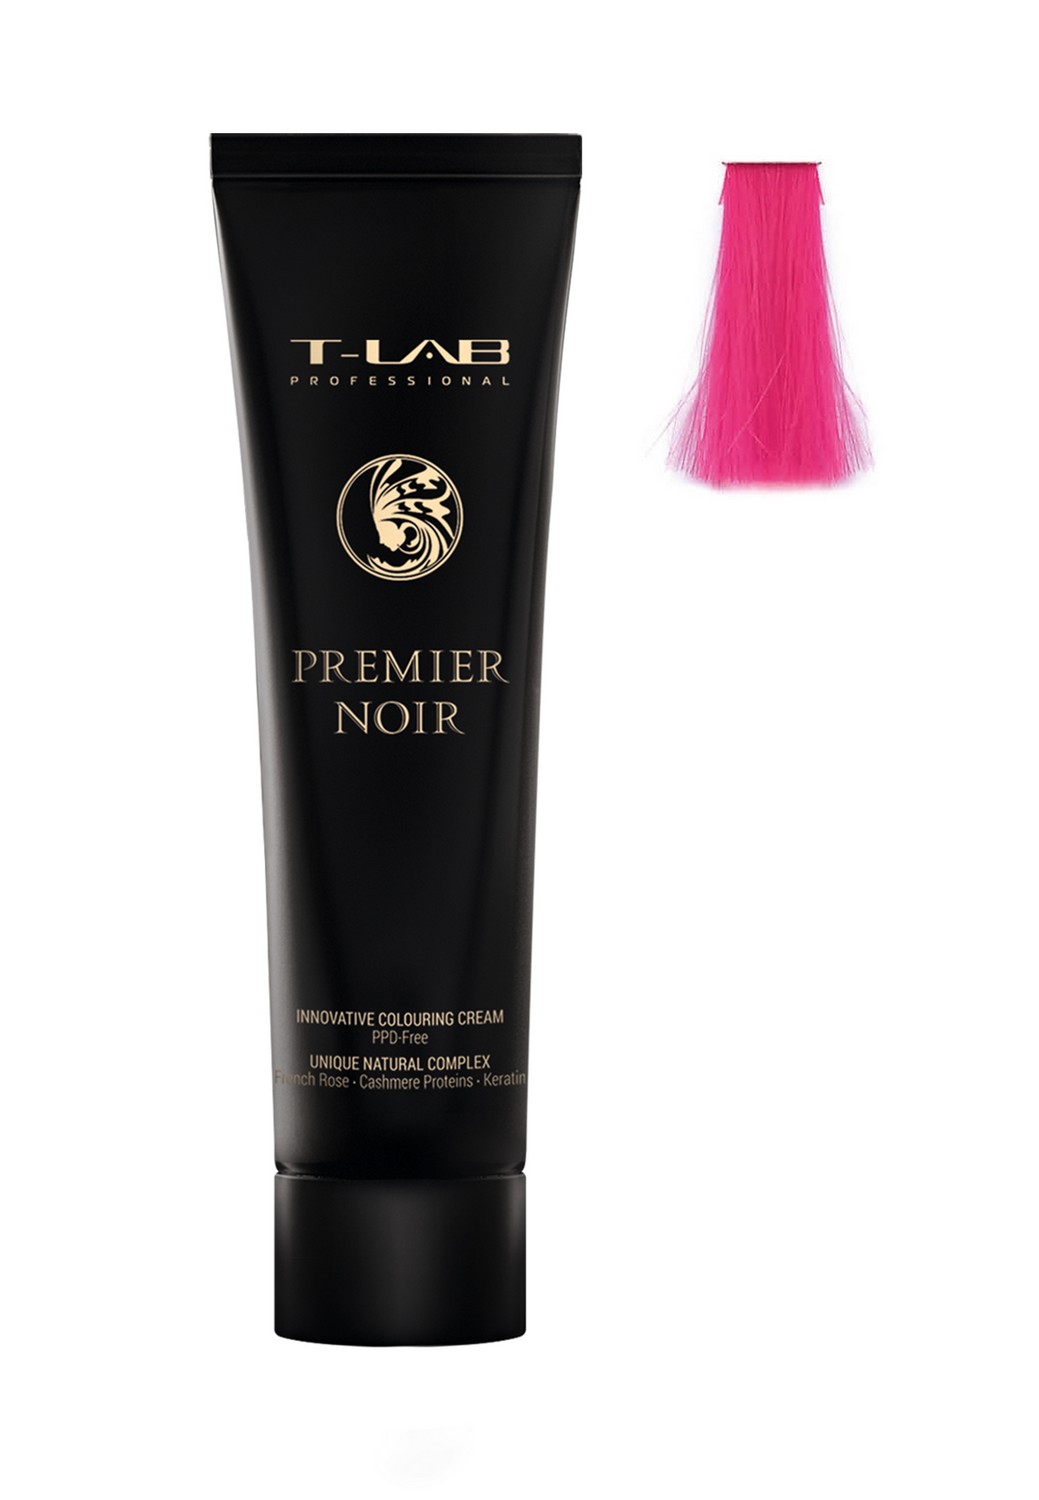 Крем-краска T-LAB Professional Premier Noir colouring cream, Pink - фото 2